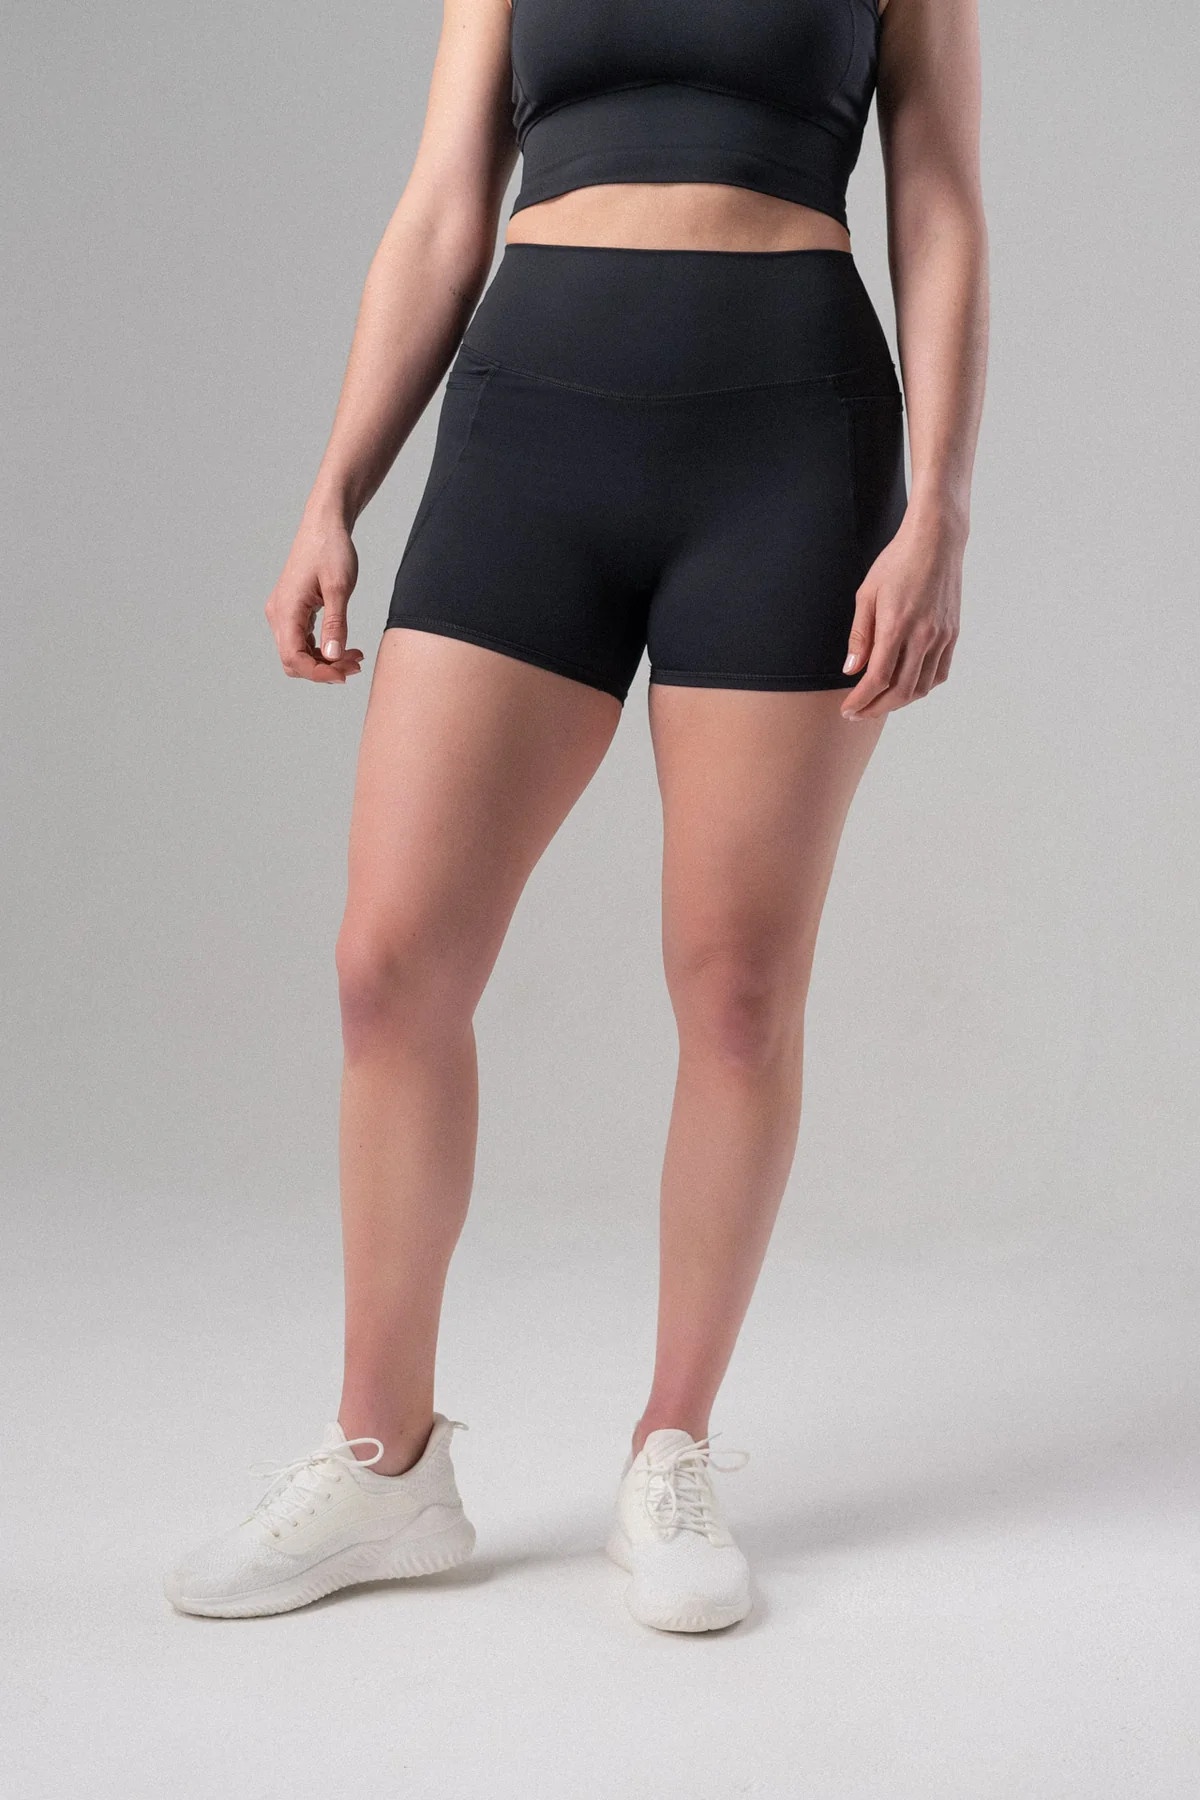 transform midi shorts 4" | Alyth Active